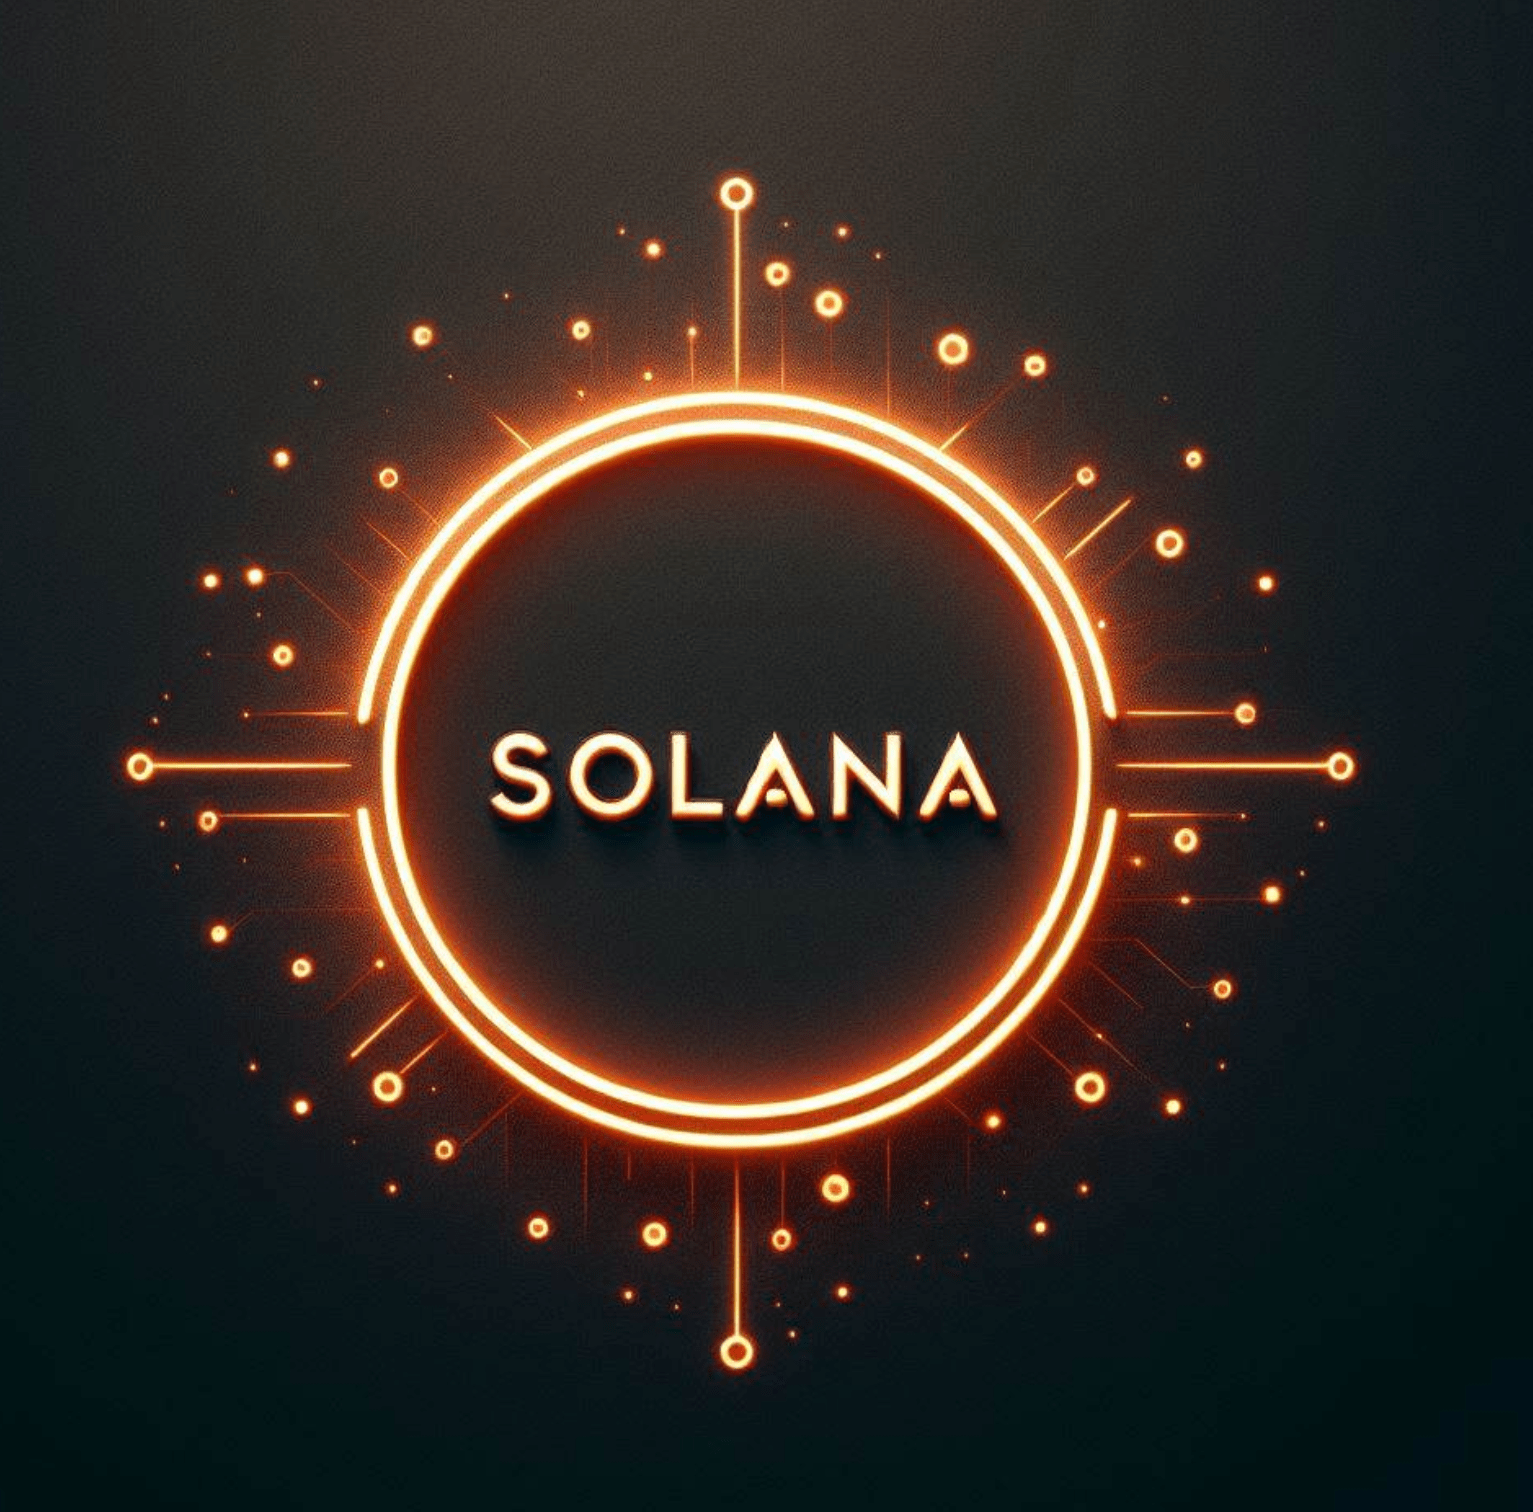 solana (sol) logo